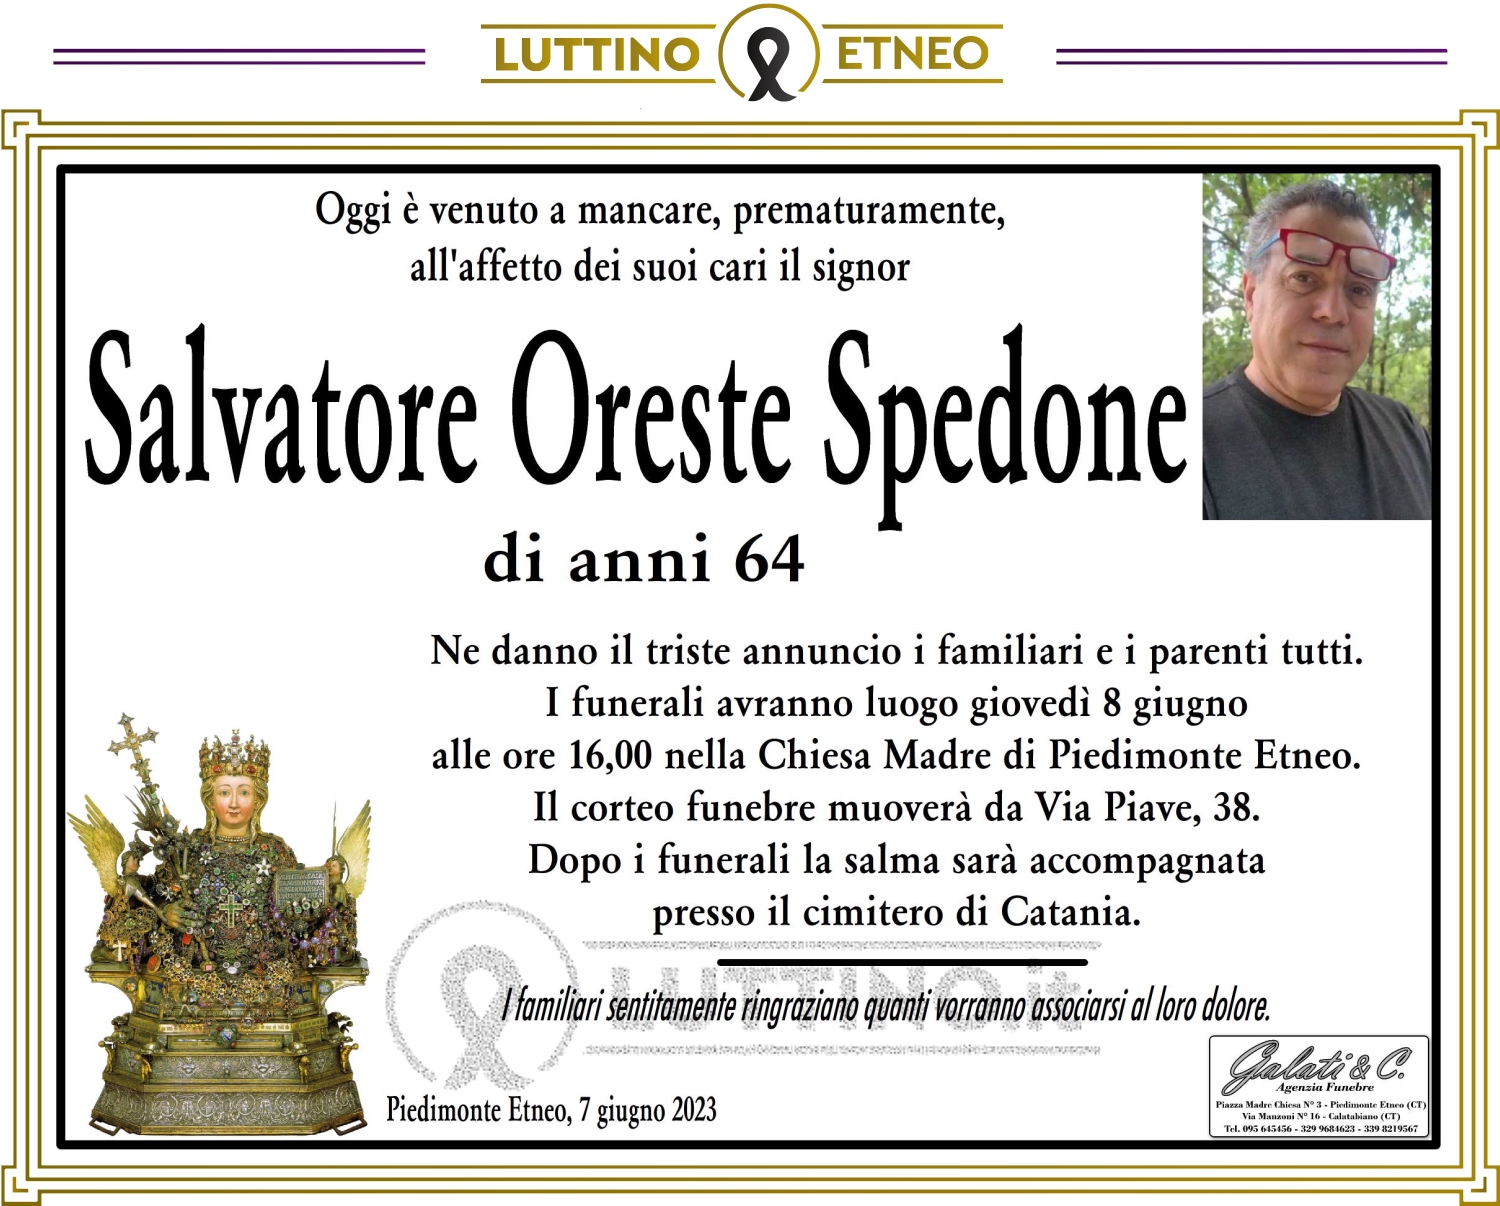 Salvatore Oreste Spedone